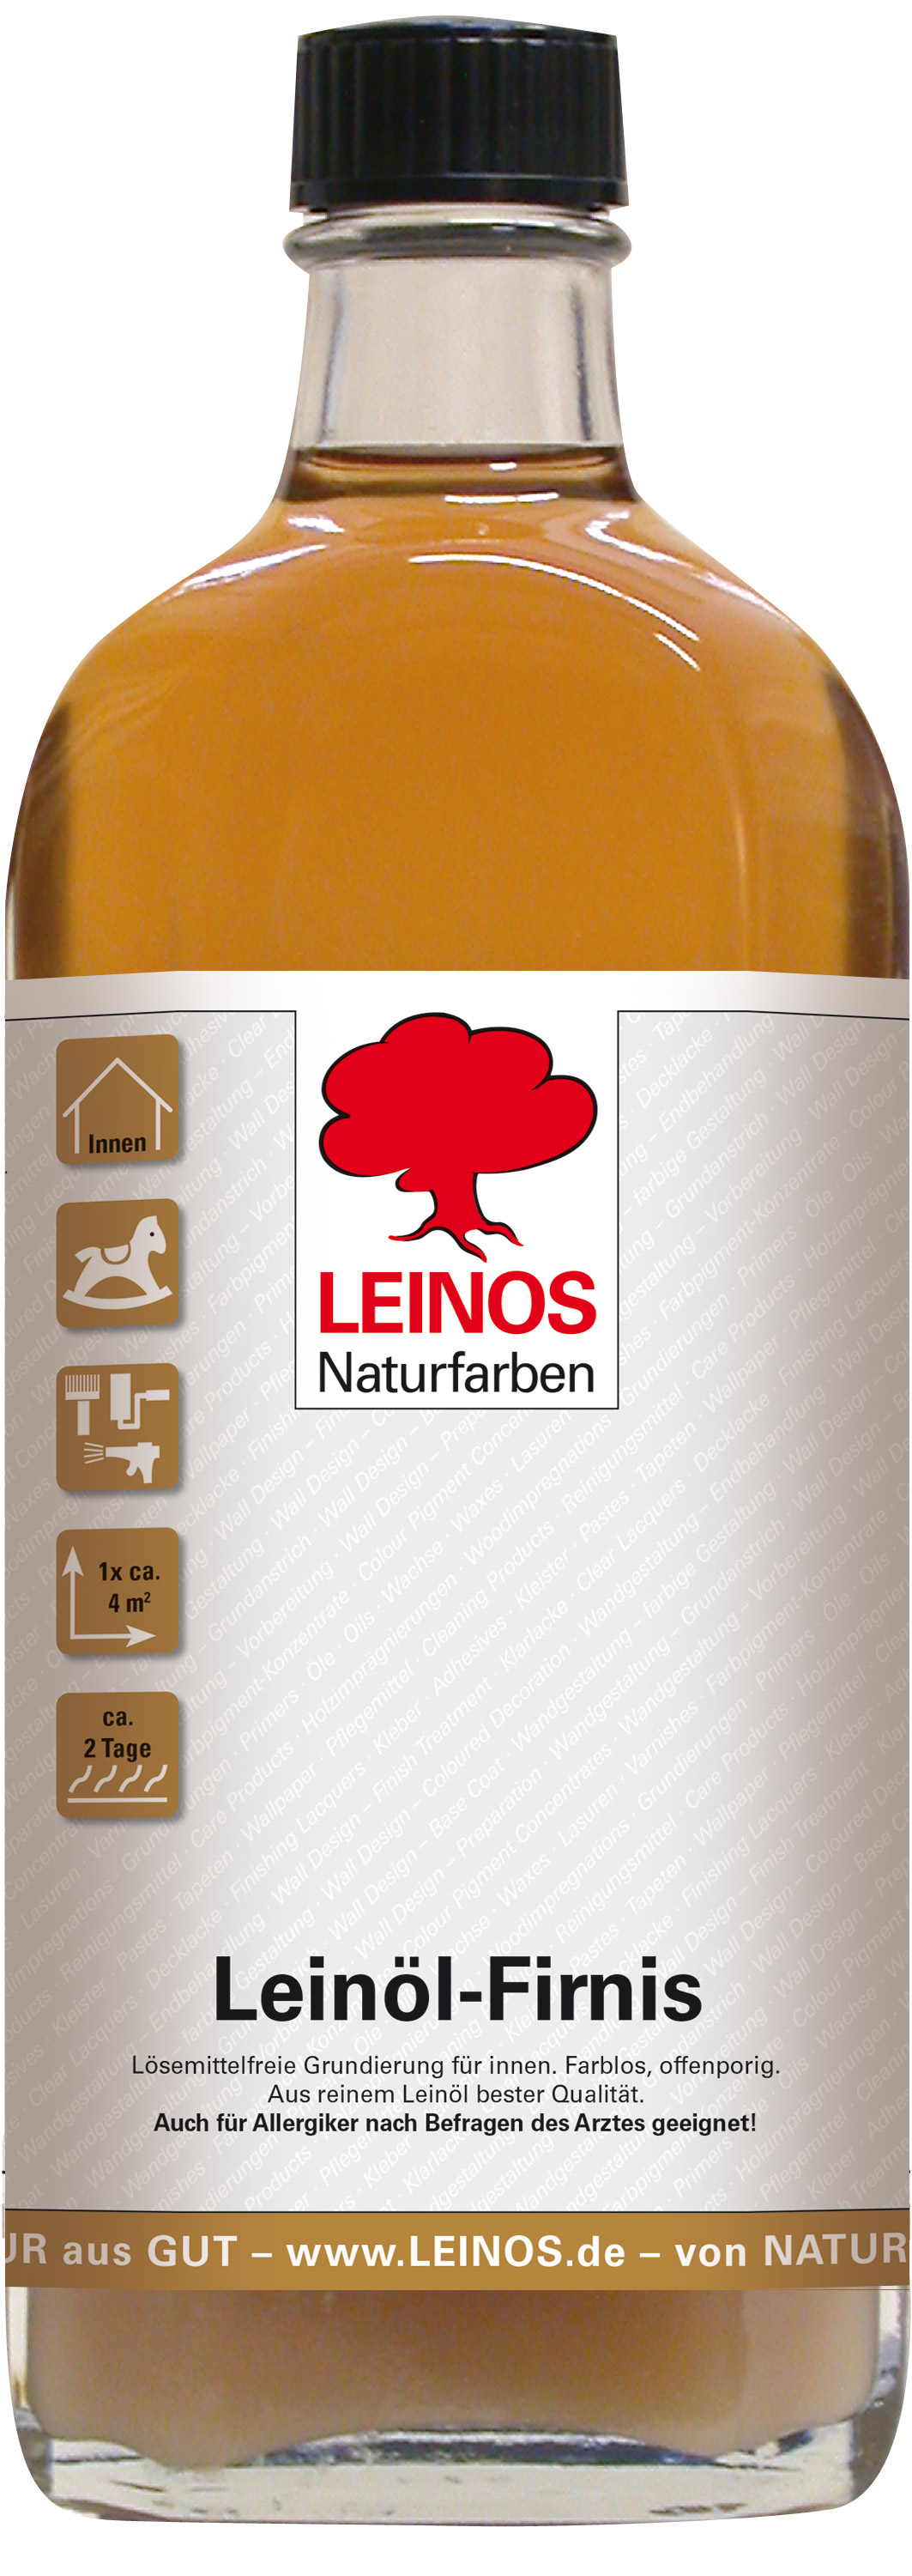 Leinos Leinöl-Firnis